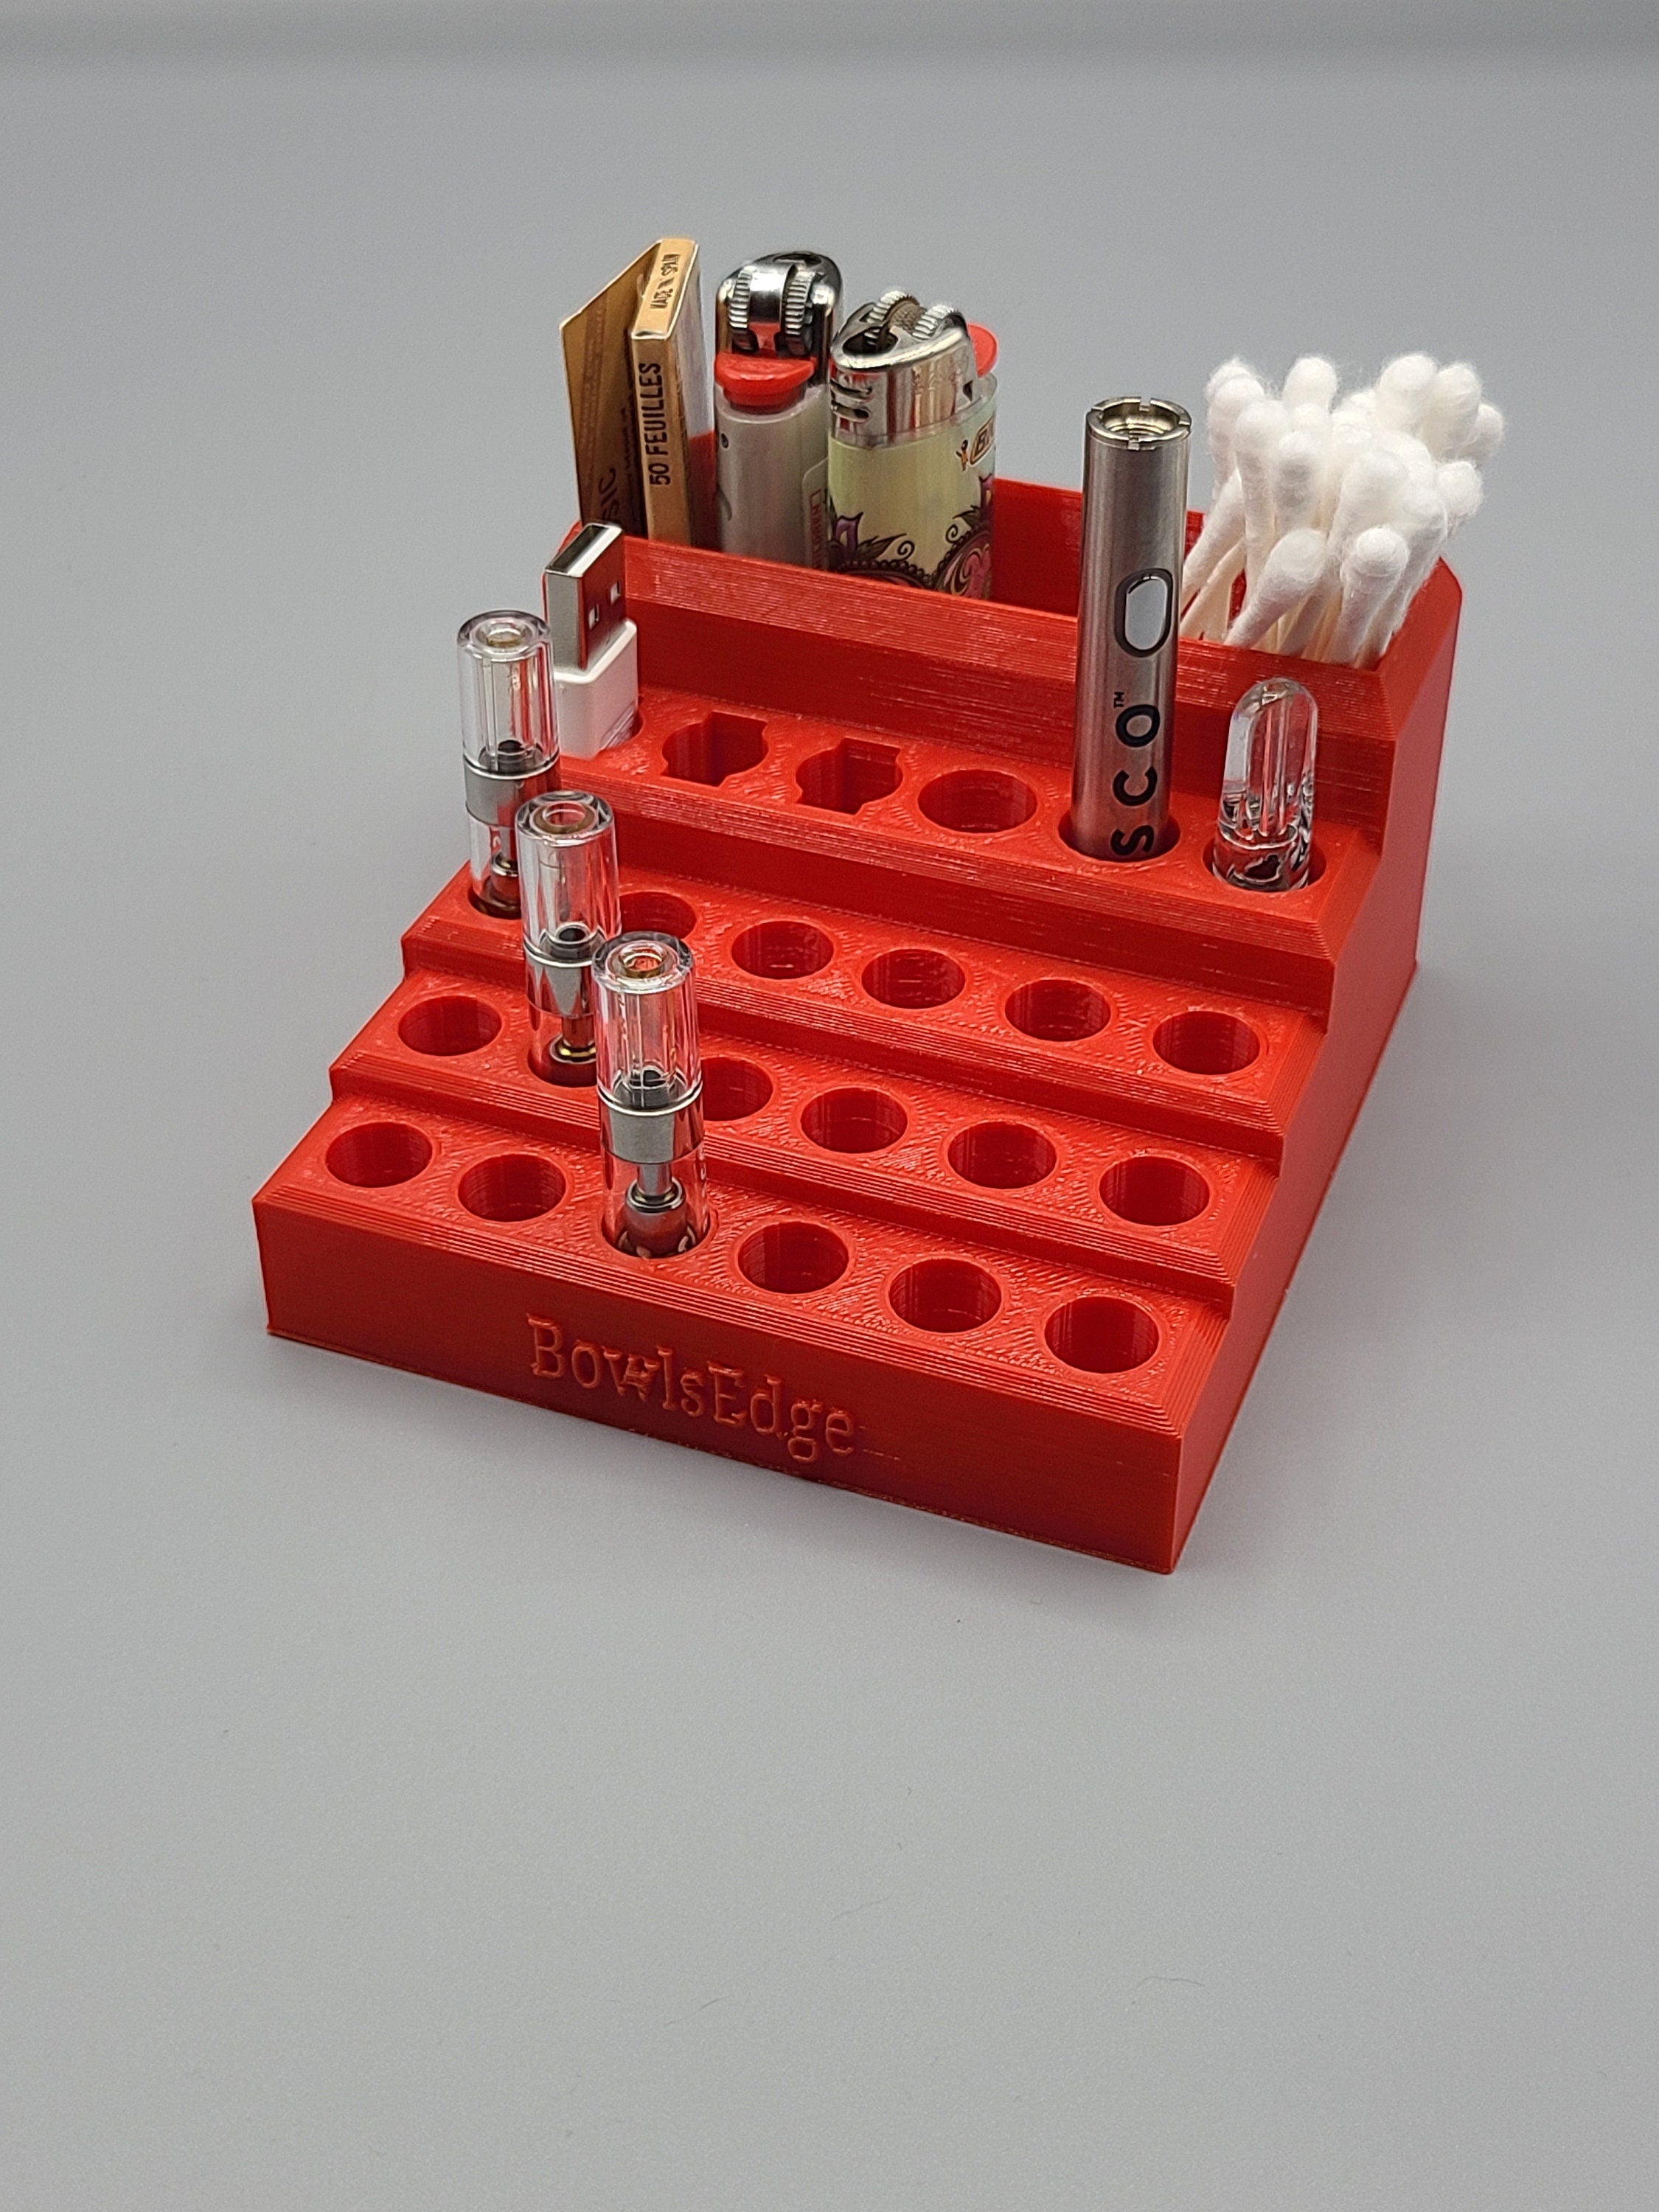 510 Cartridge Holder with Storage – BowlsEdge